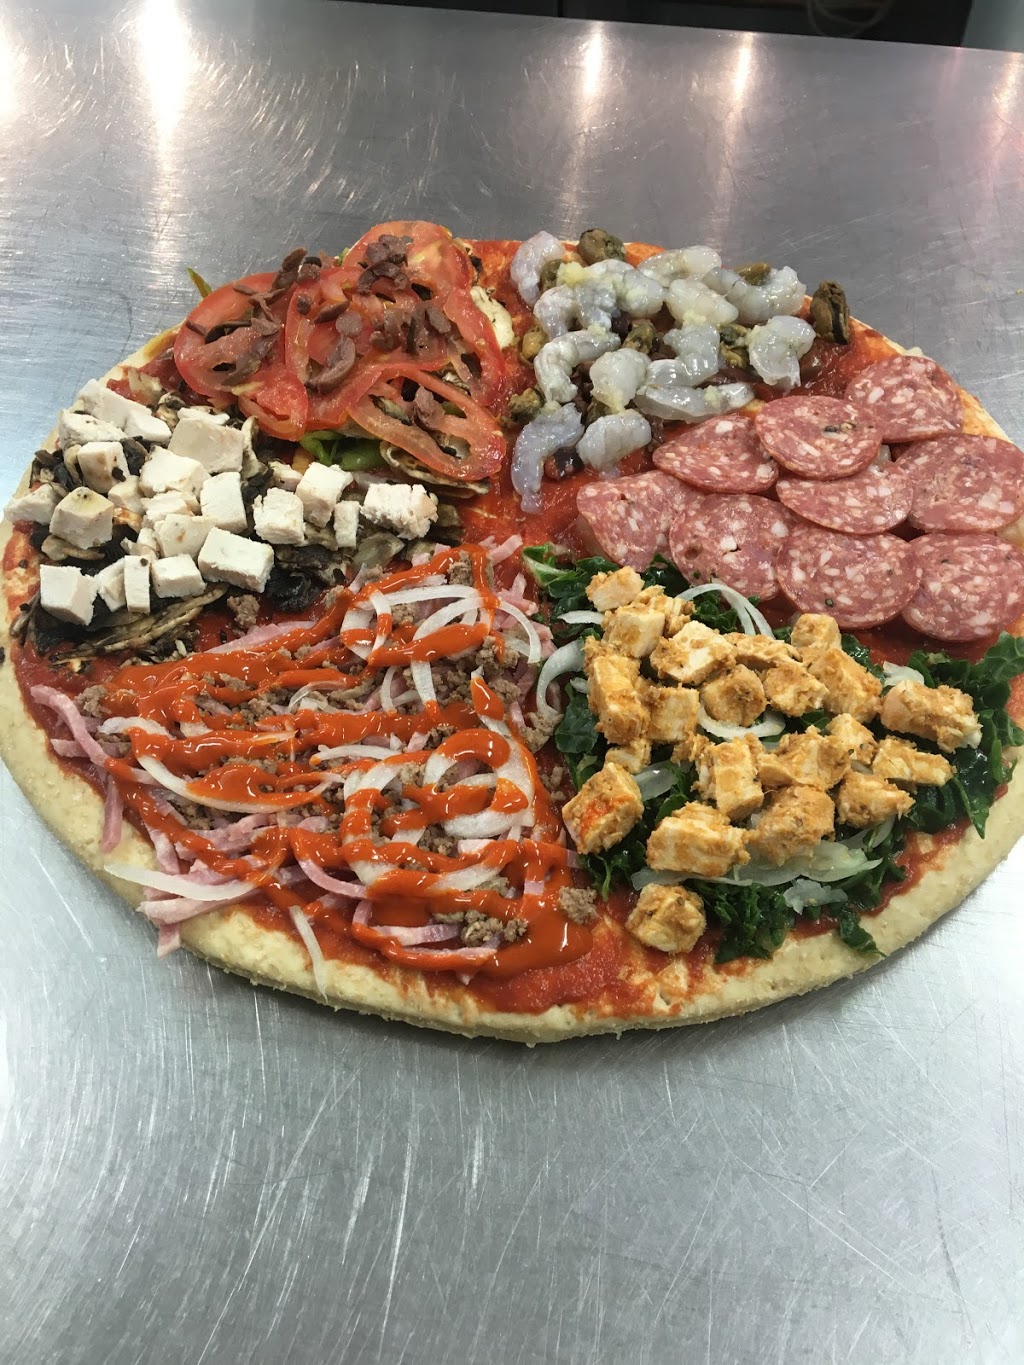 Earth n Sea Pizza in ANNERLEY | 336 Ipswich Rd, Annerley QLD 4103, Australia | Phone: (07) 3847 7780